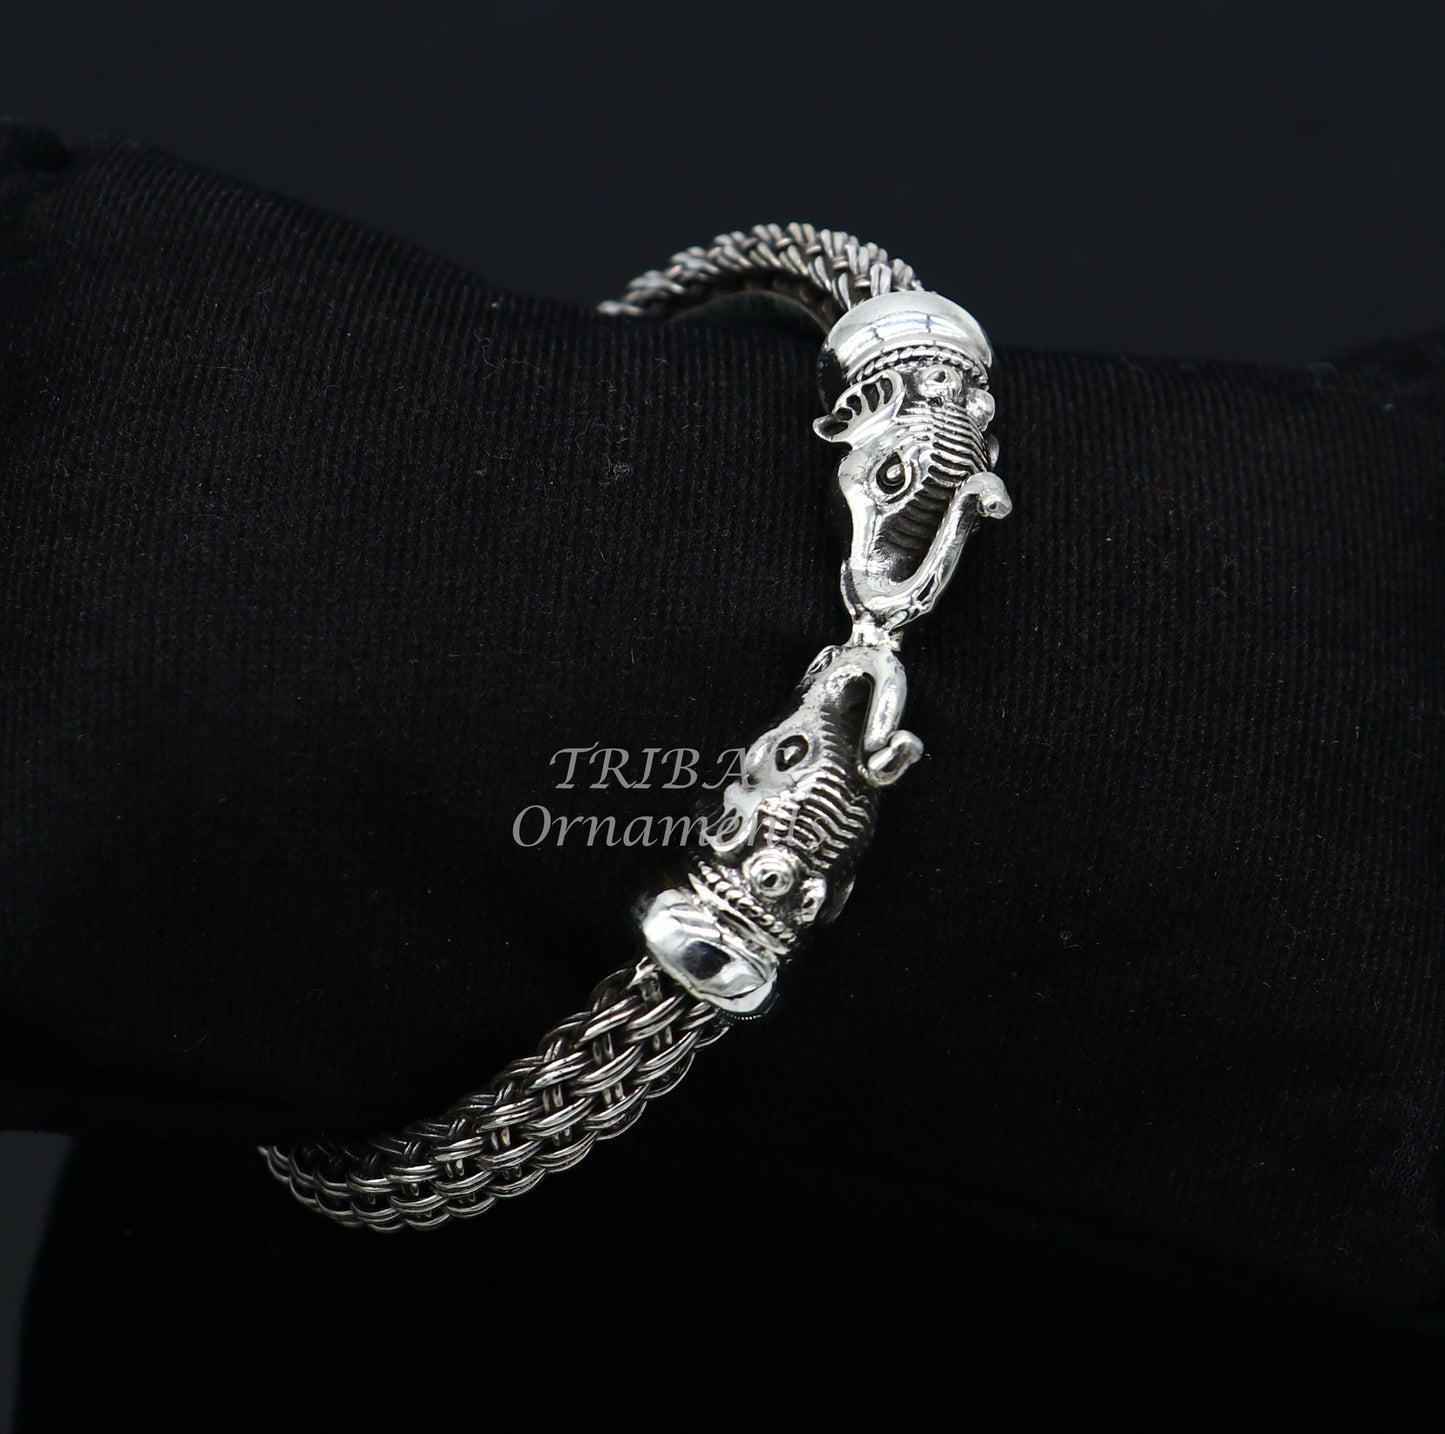 Vintage antique design handcrafted work 925 sterling silver elephant face bangle bracelet tribal jewelry best gifting nsk507 - TRIBAL ORNAMENTS